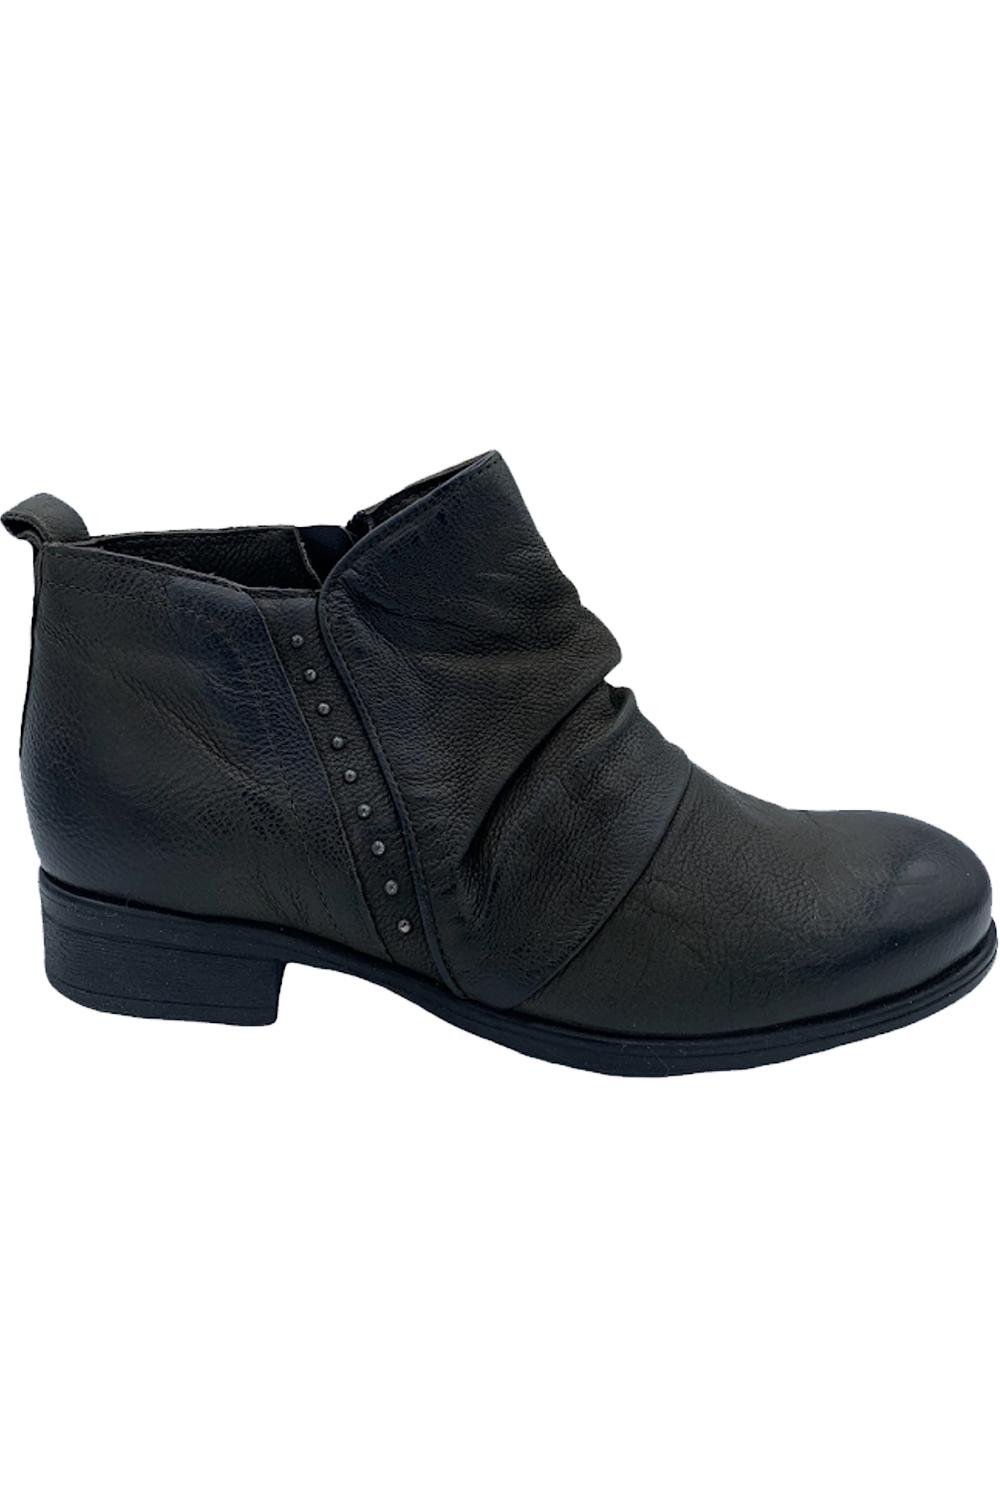 Miz Mooz Leather Buckle Wide Width Ankle Boots -Shane in Black 